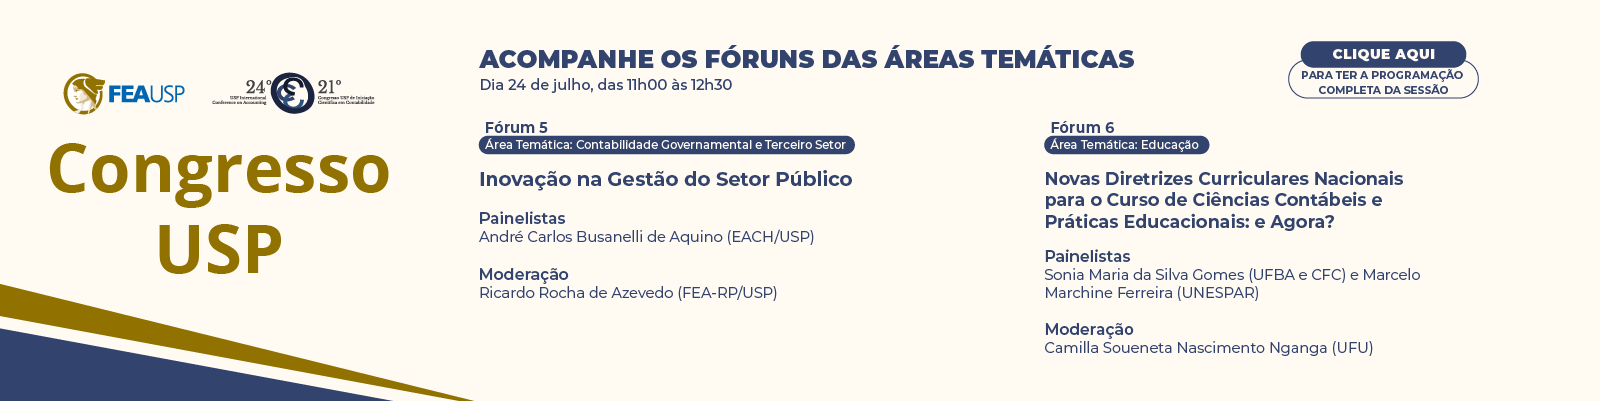 Banner_Forum-das-areas-tematicas_congresso-USP-3